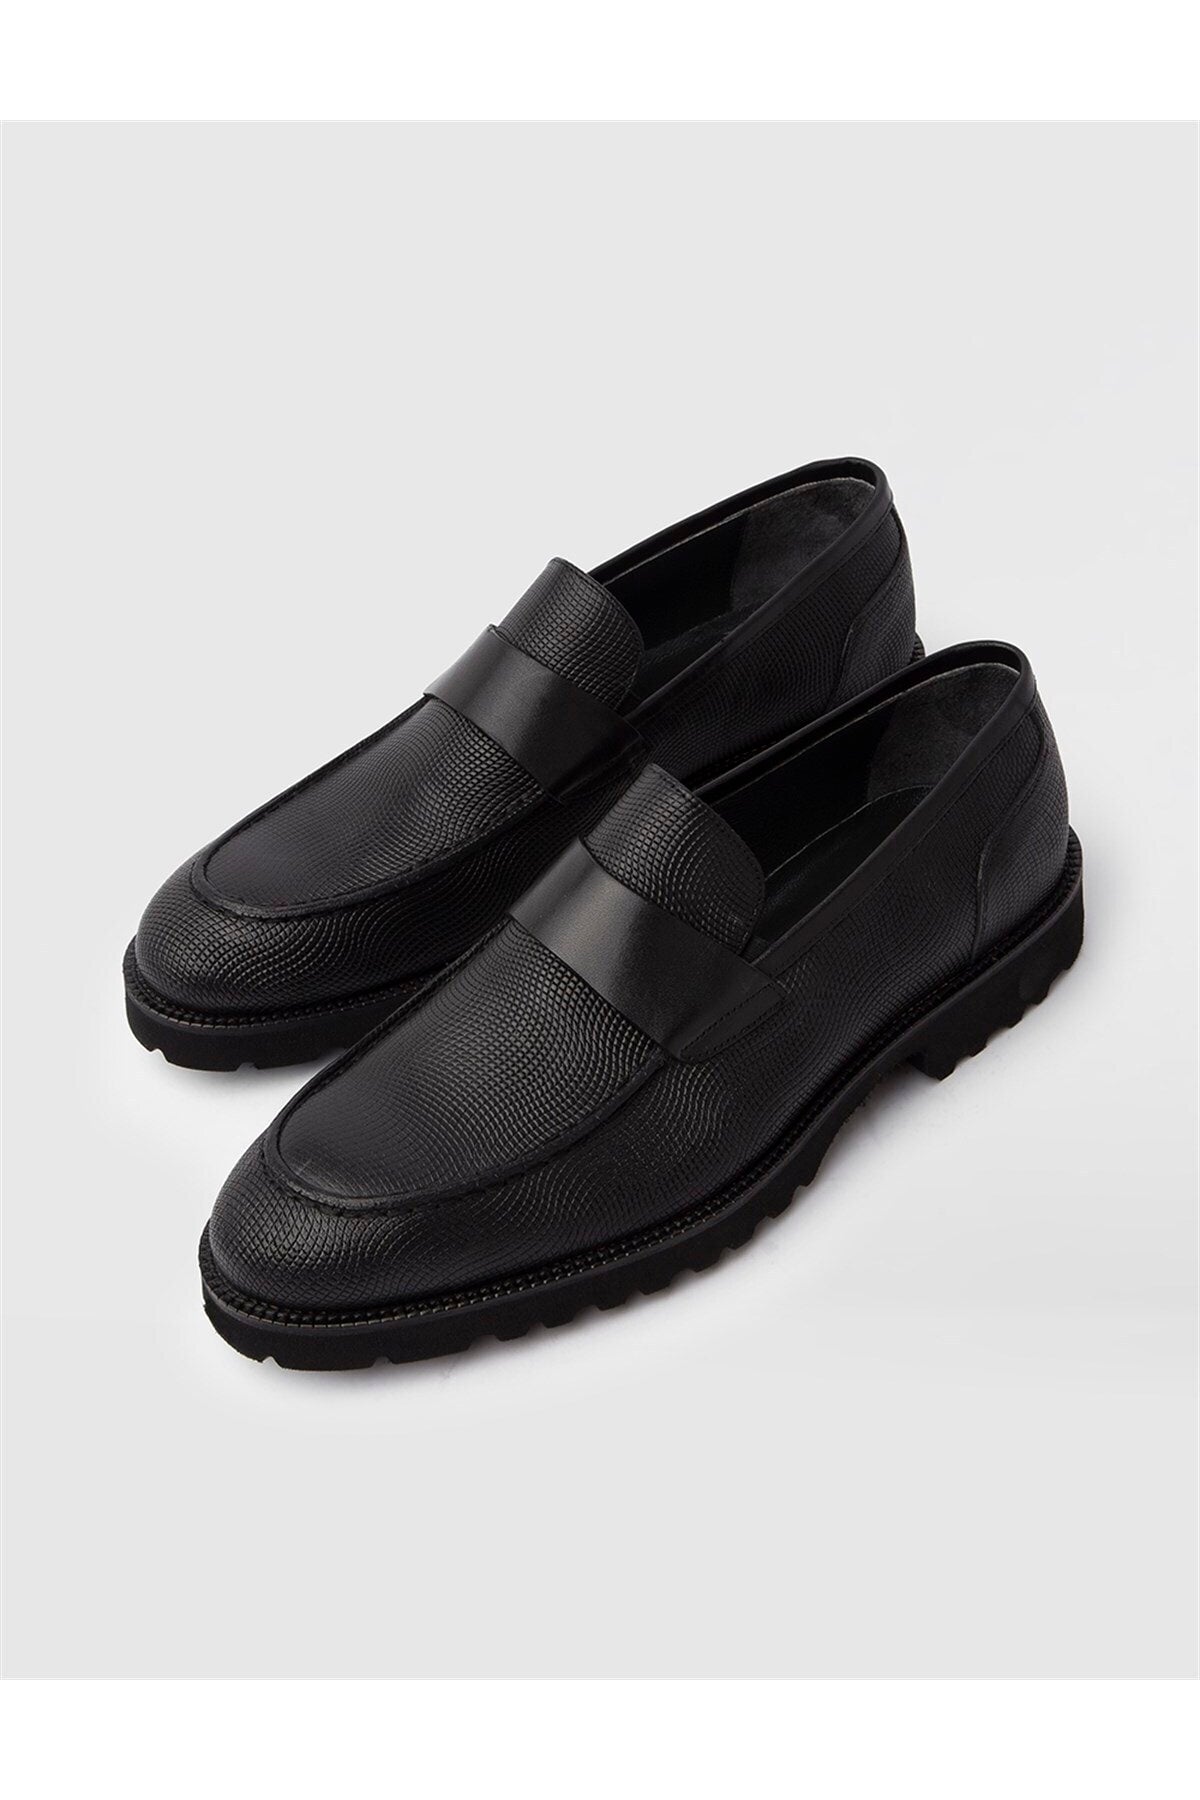 Dagrun Genuine Printed Leather Men's Black Casual Shoes